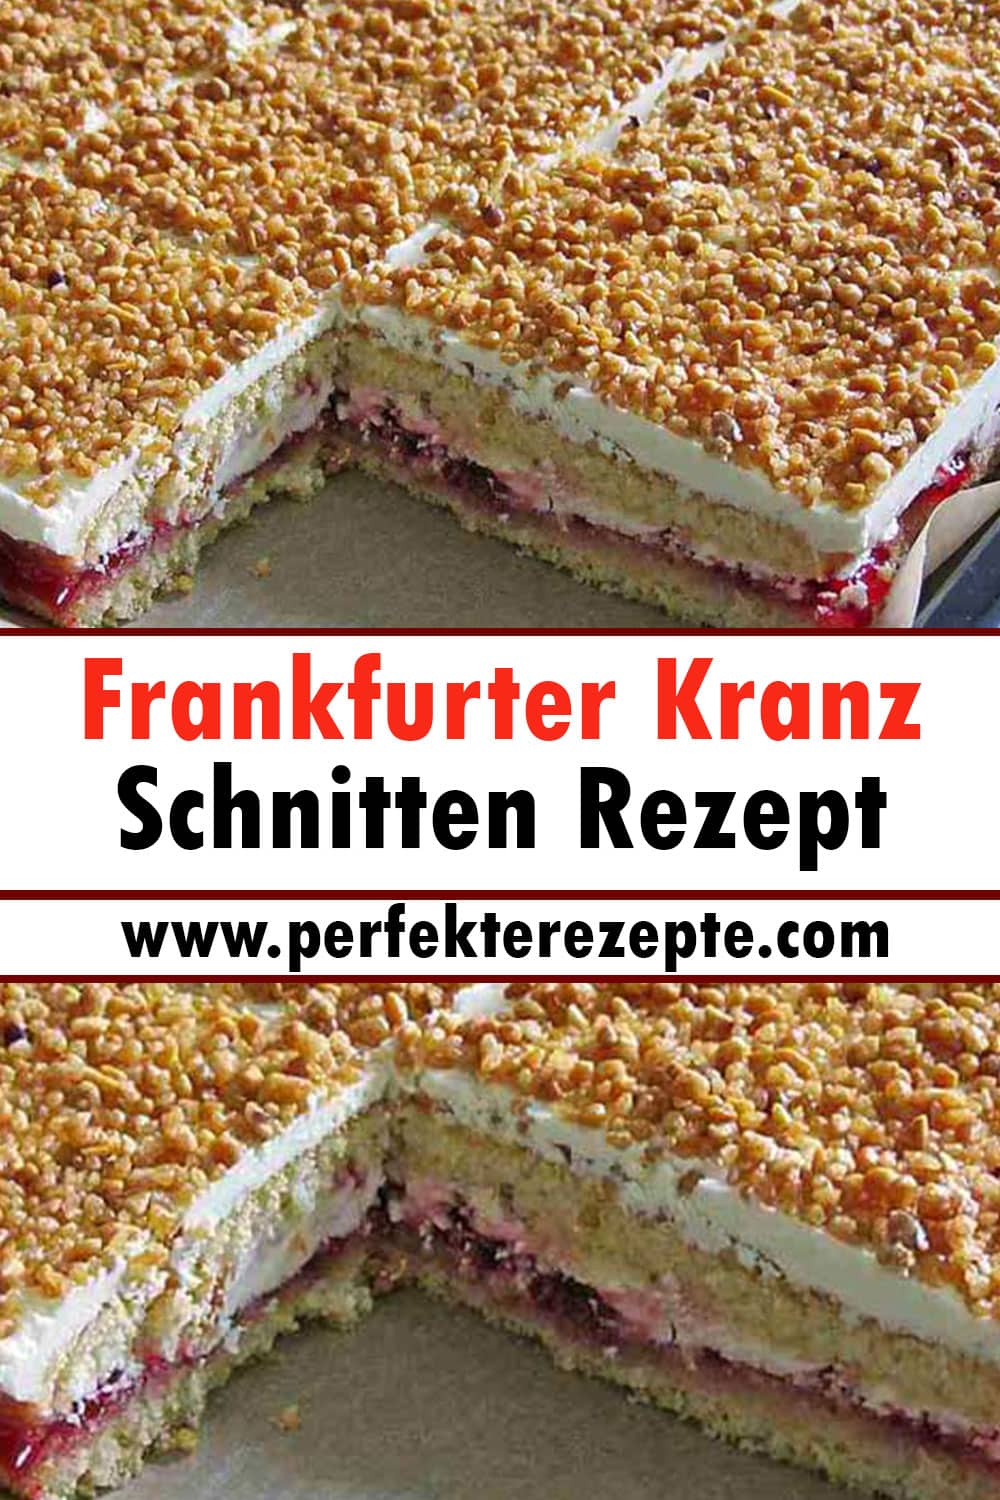 Frankfurter Kranz Schnitten Rezept